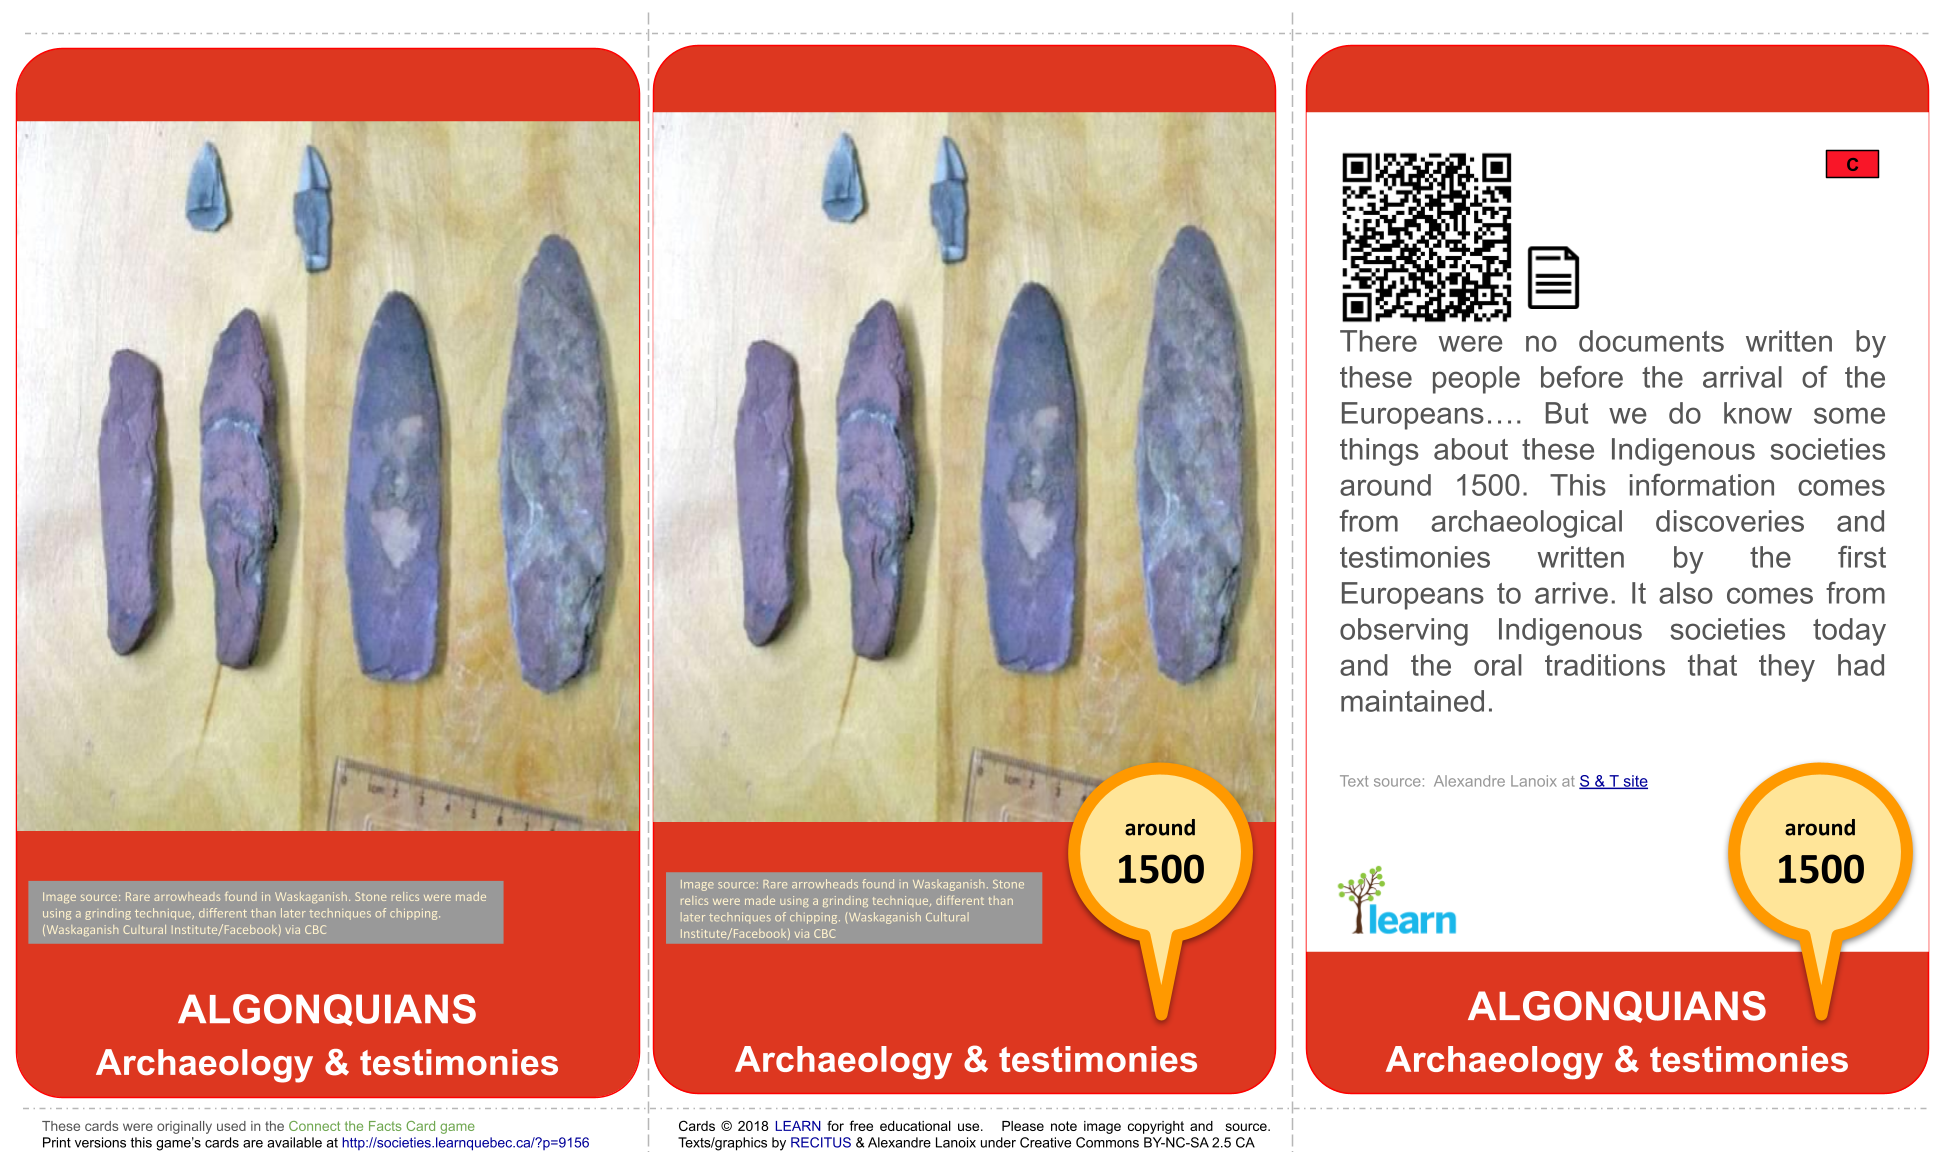 Algonquians: Archaeology & testimonies 